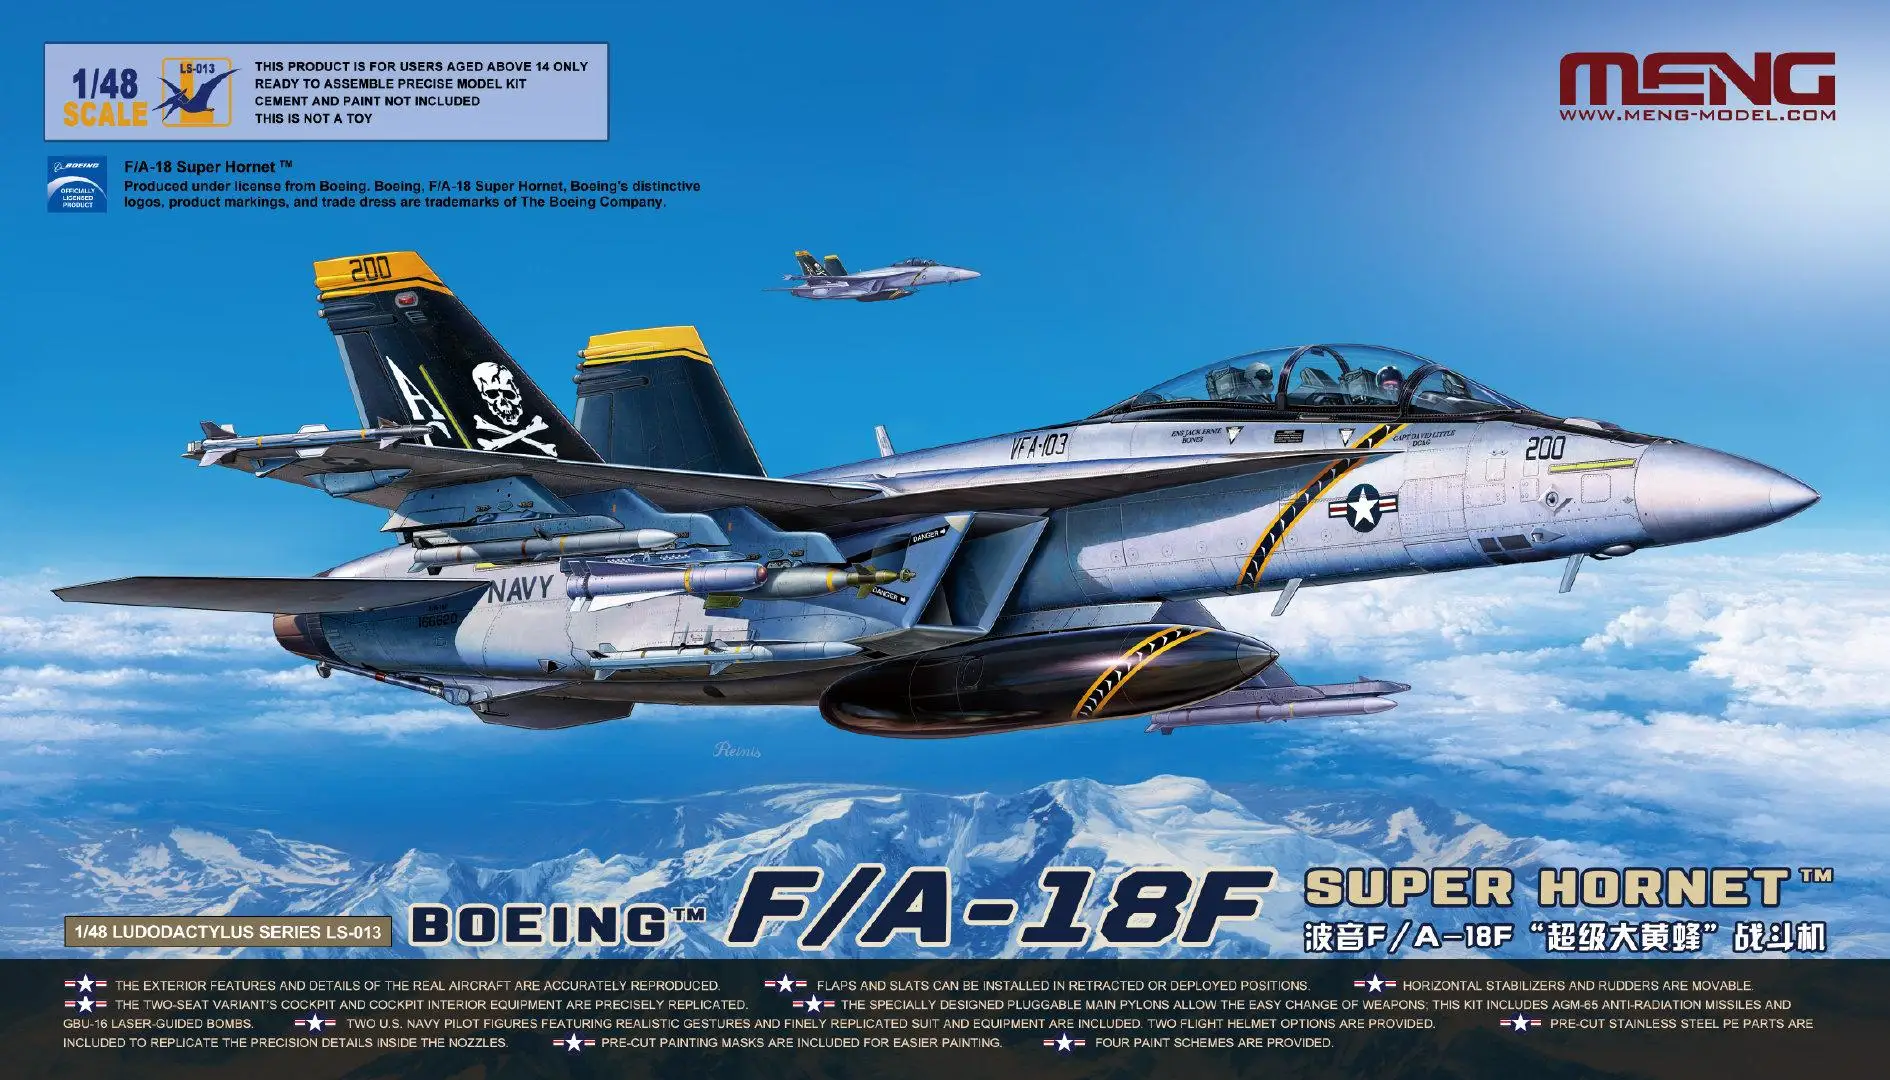 MENG LS-013 1/48 BOEING F/A-18F SUPER HORNET Plastic Model Kit